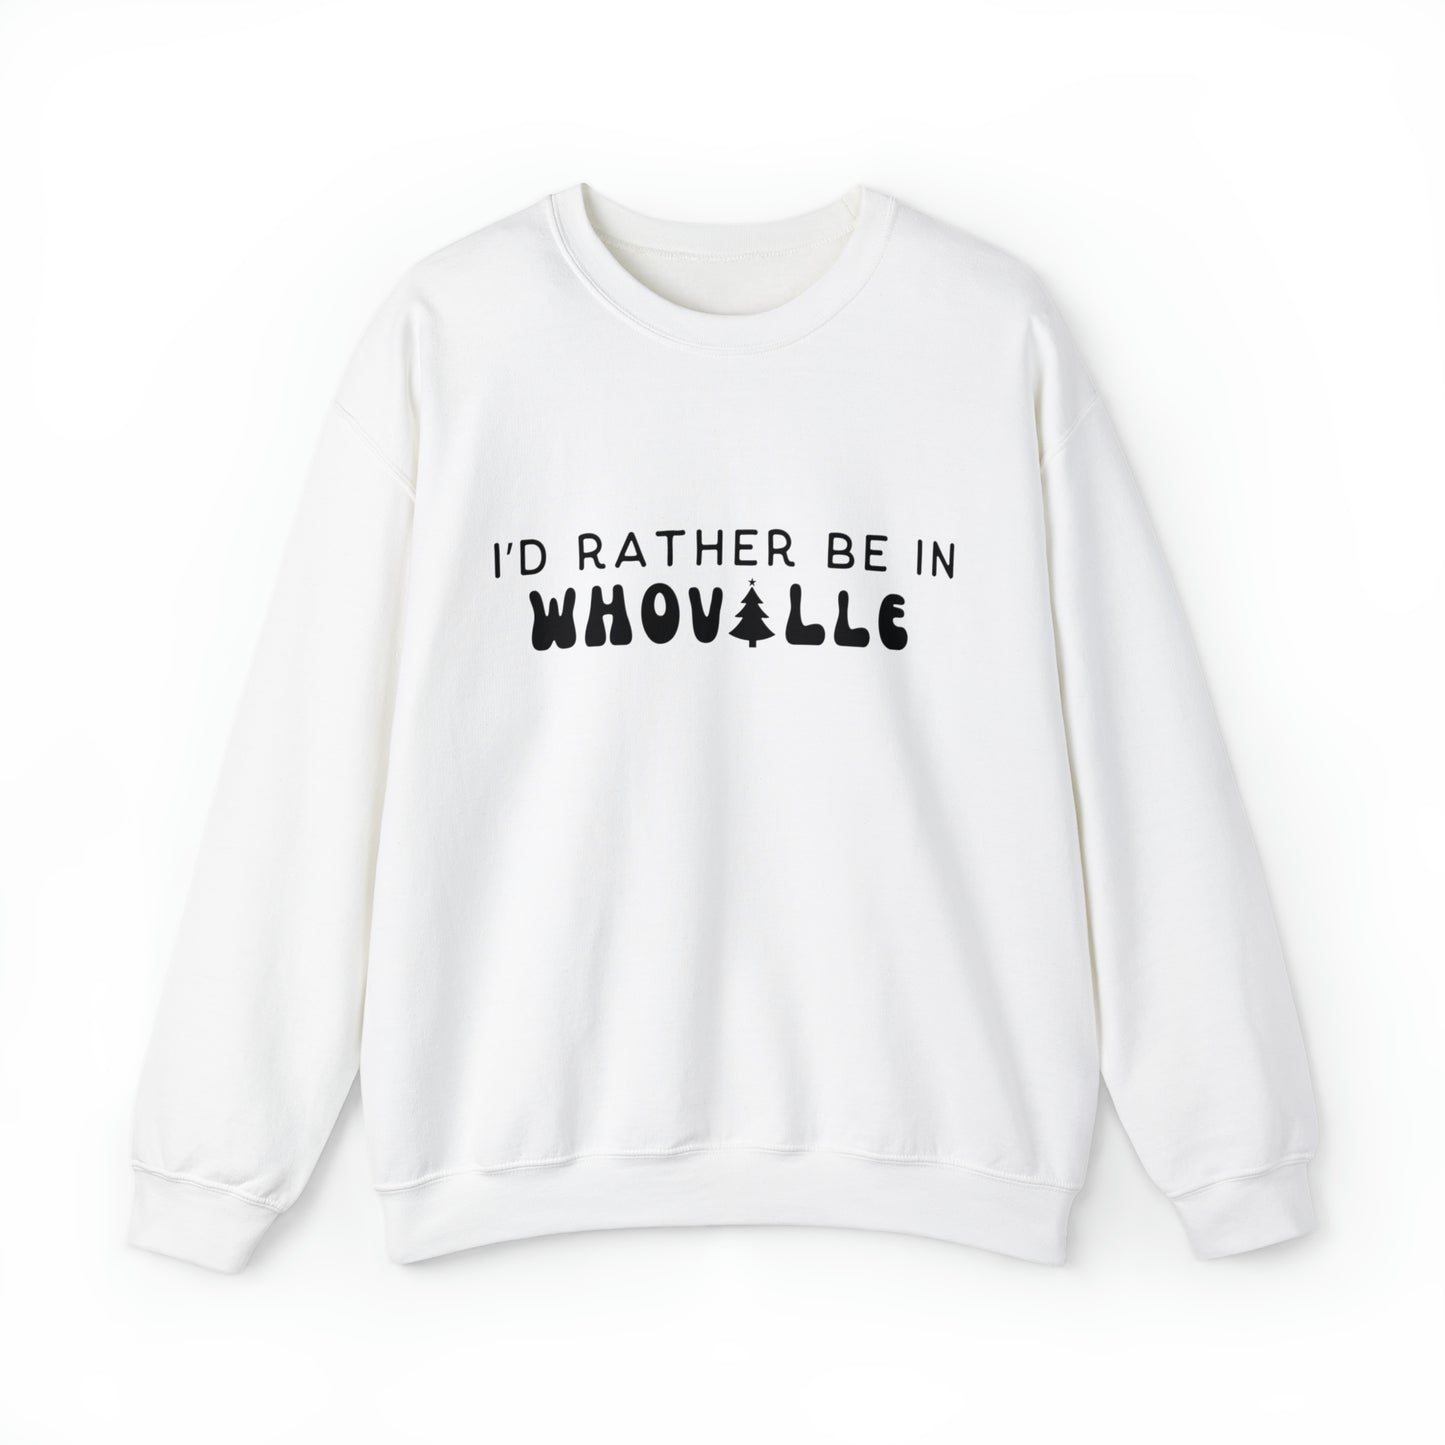 I'd rather be in Whoville Crewneck Sweatshirt